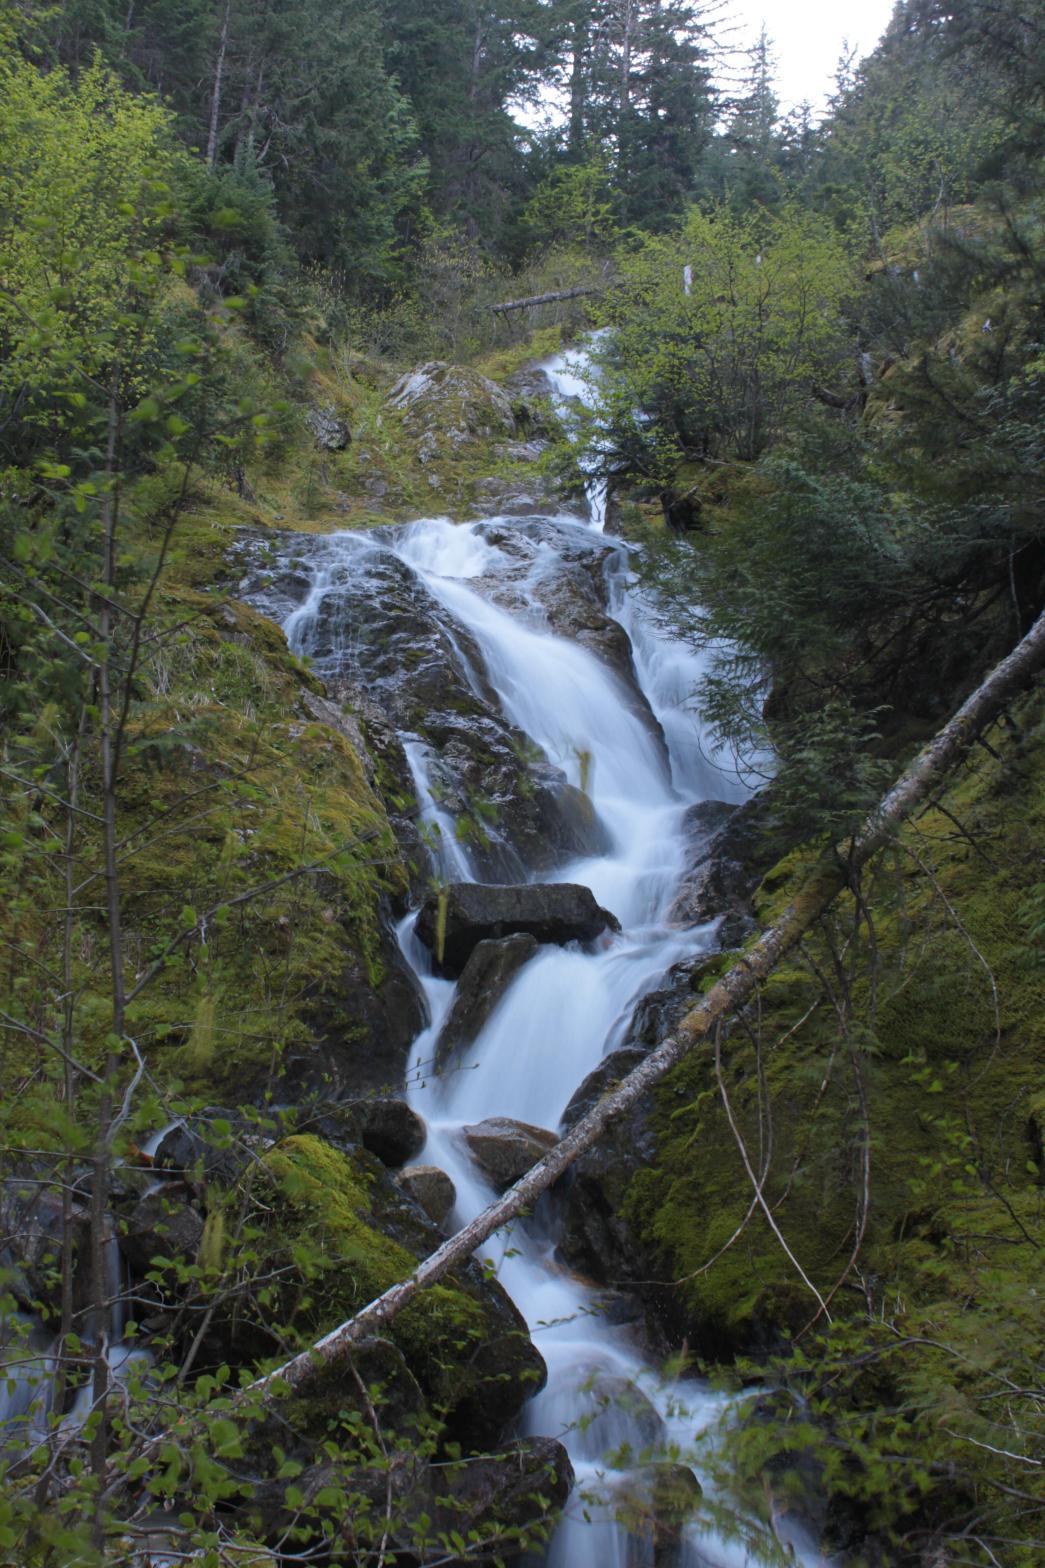 Upper section of Lillian Creek Falls